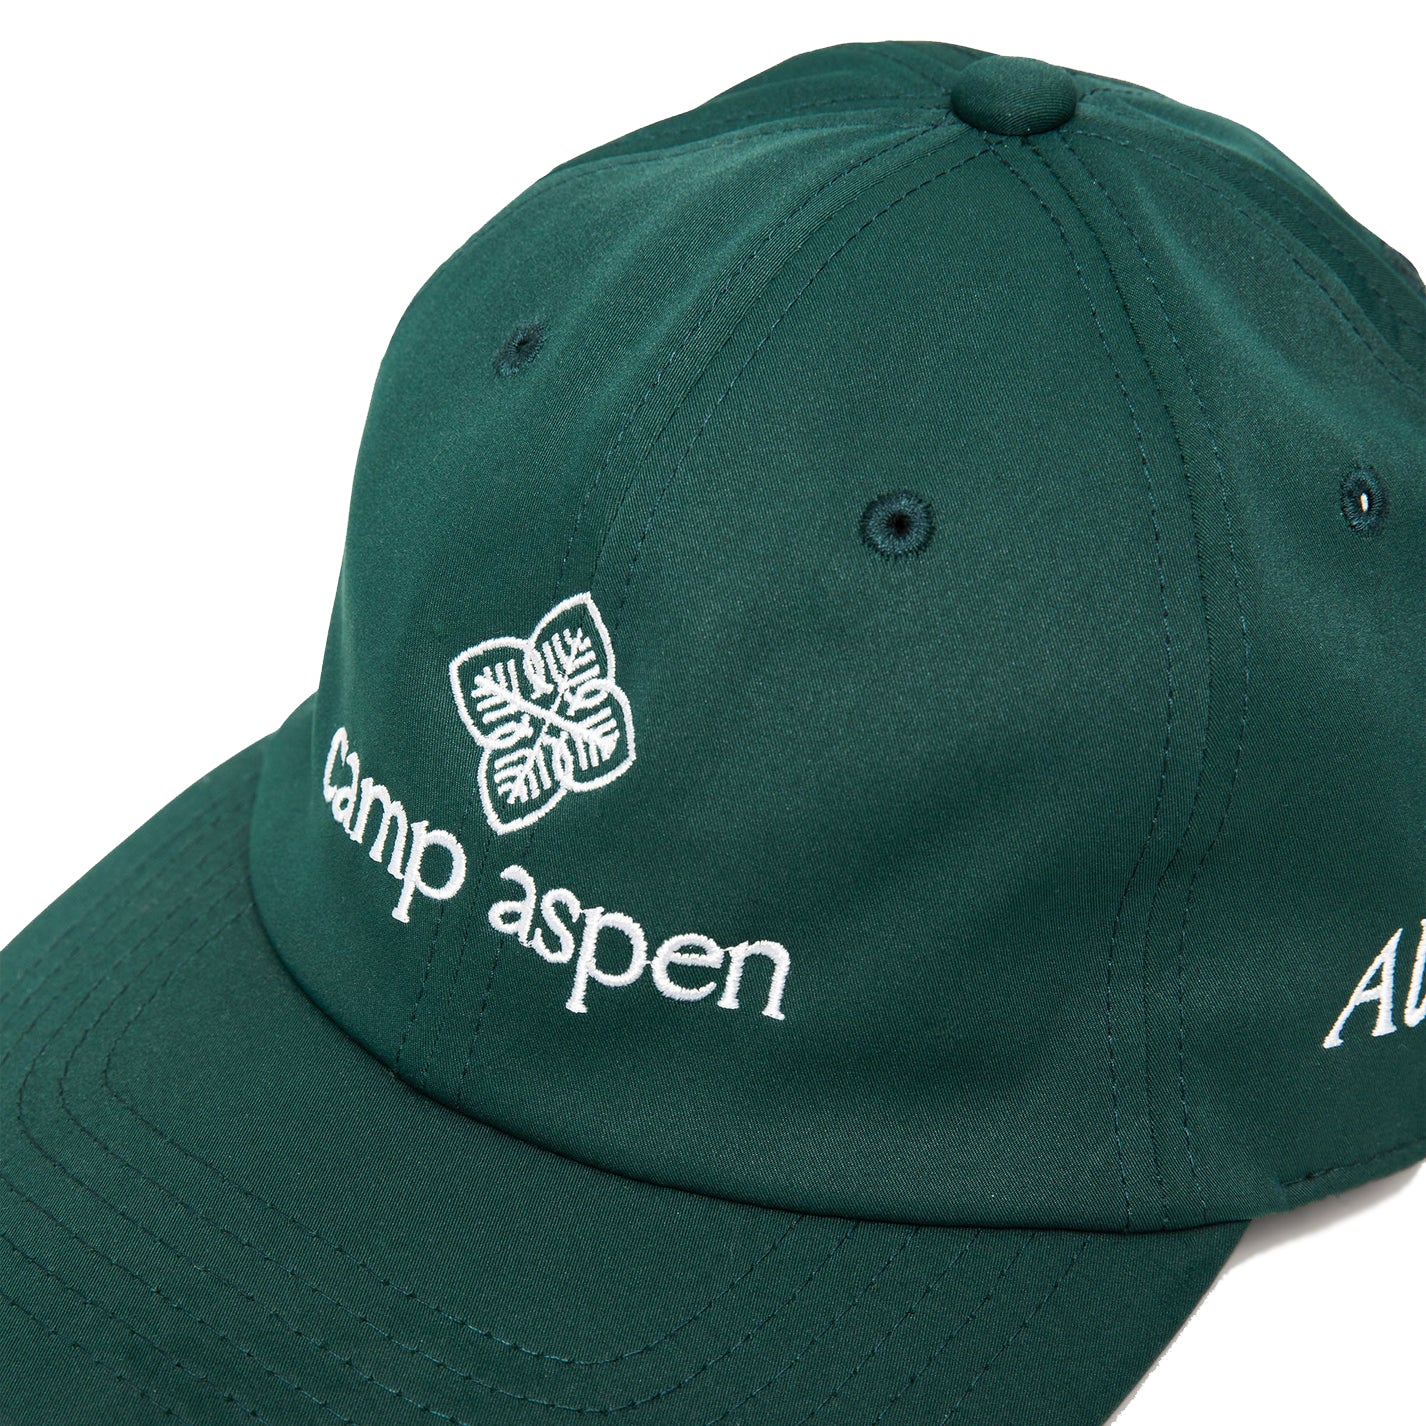 Camp Aspen x DVSN WEST Counselor Cap